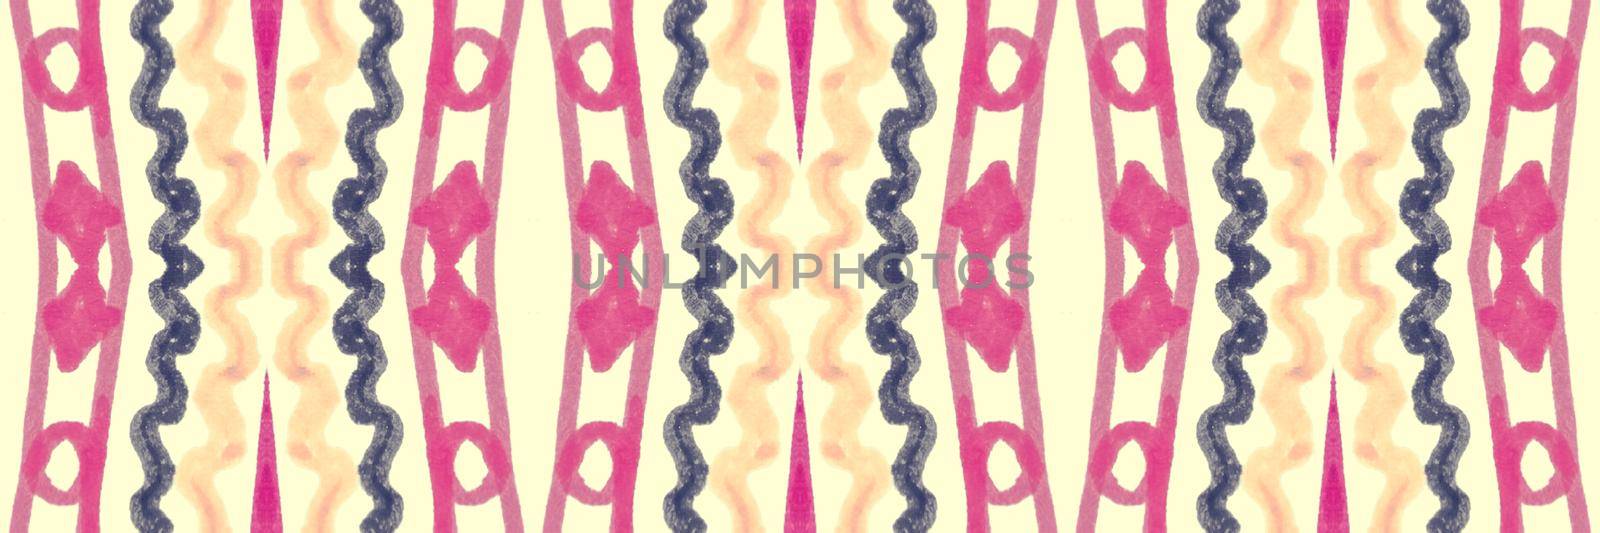 American pattern. Seamless tribal background. Grunge maya ornament. Hand drawn ethnic navajo texture. Mexico textile design. Vintage aztec print. Art American pattern.